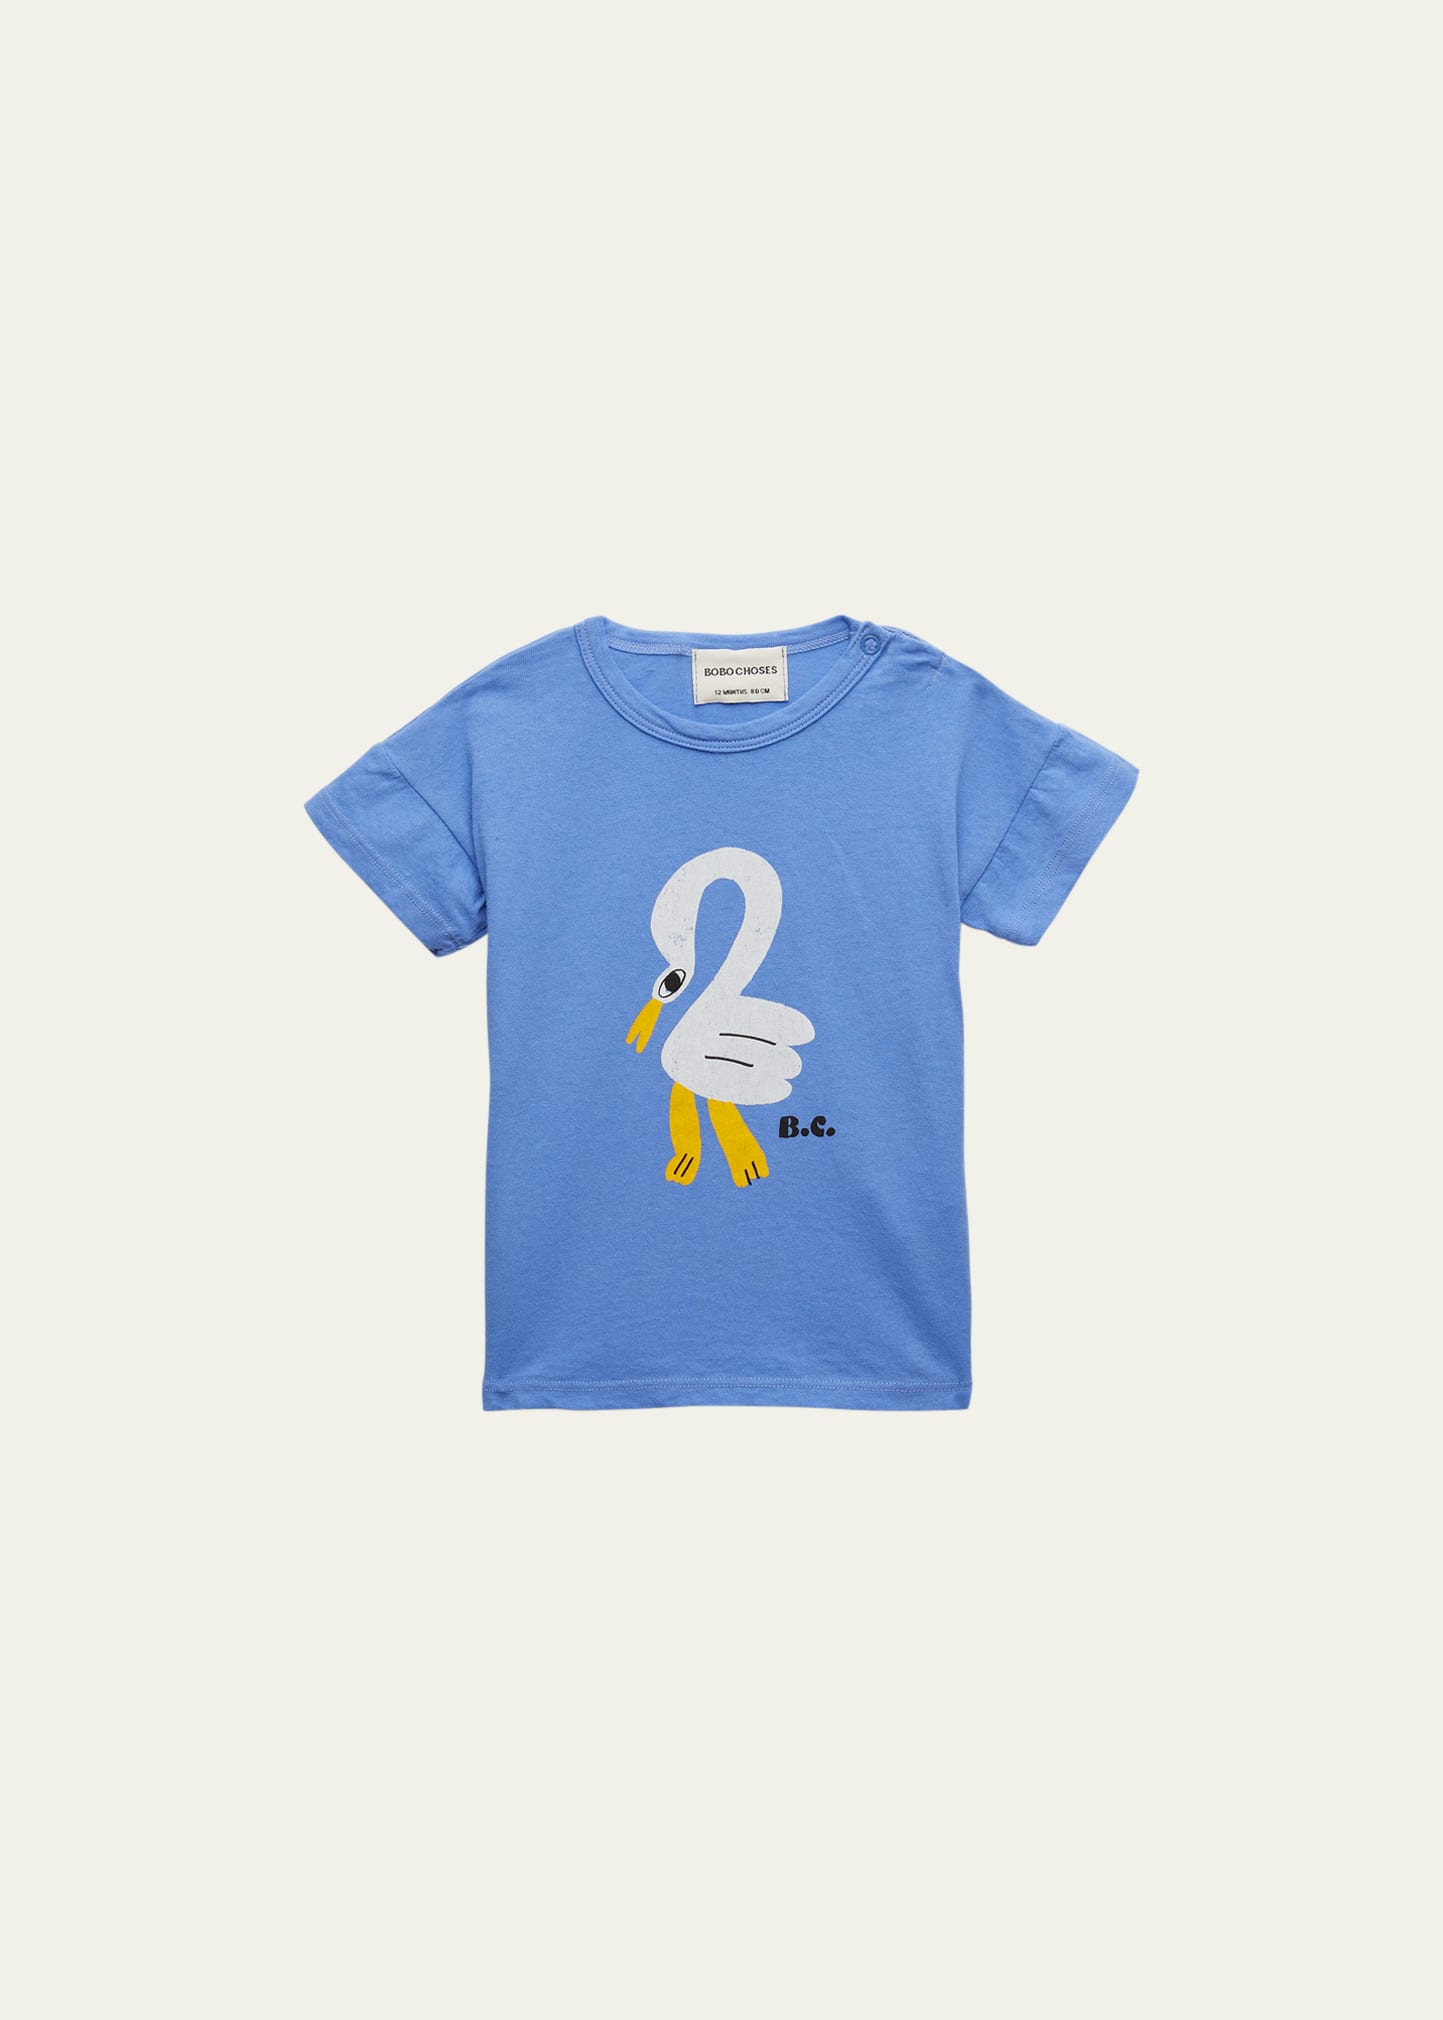 Bobo Choses Girl's Pelican Graphic T-Shirt, Size 6M-24M